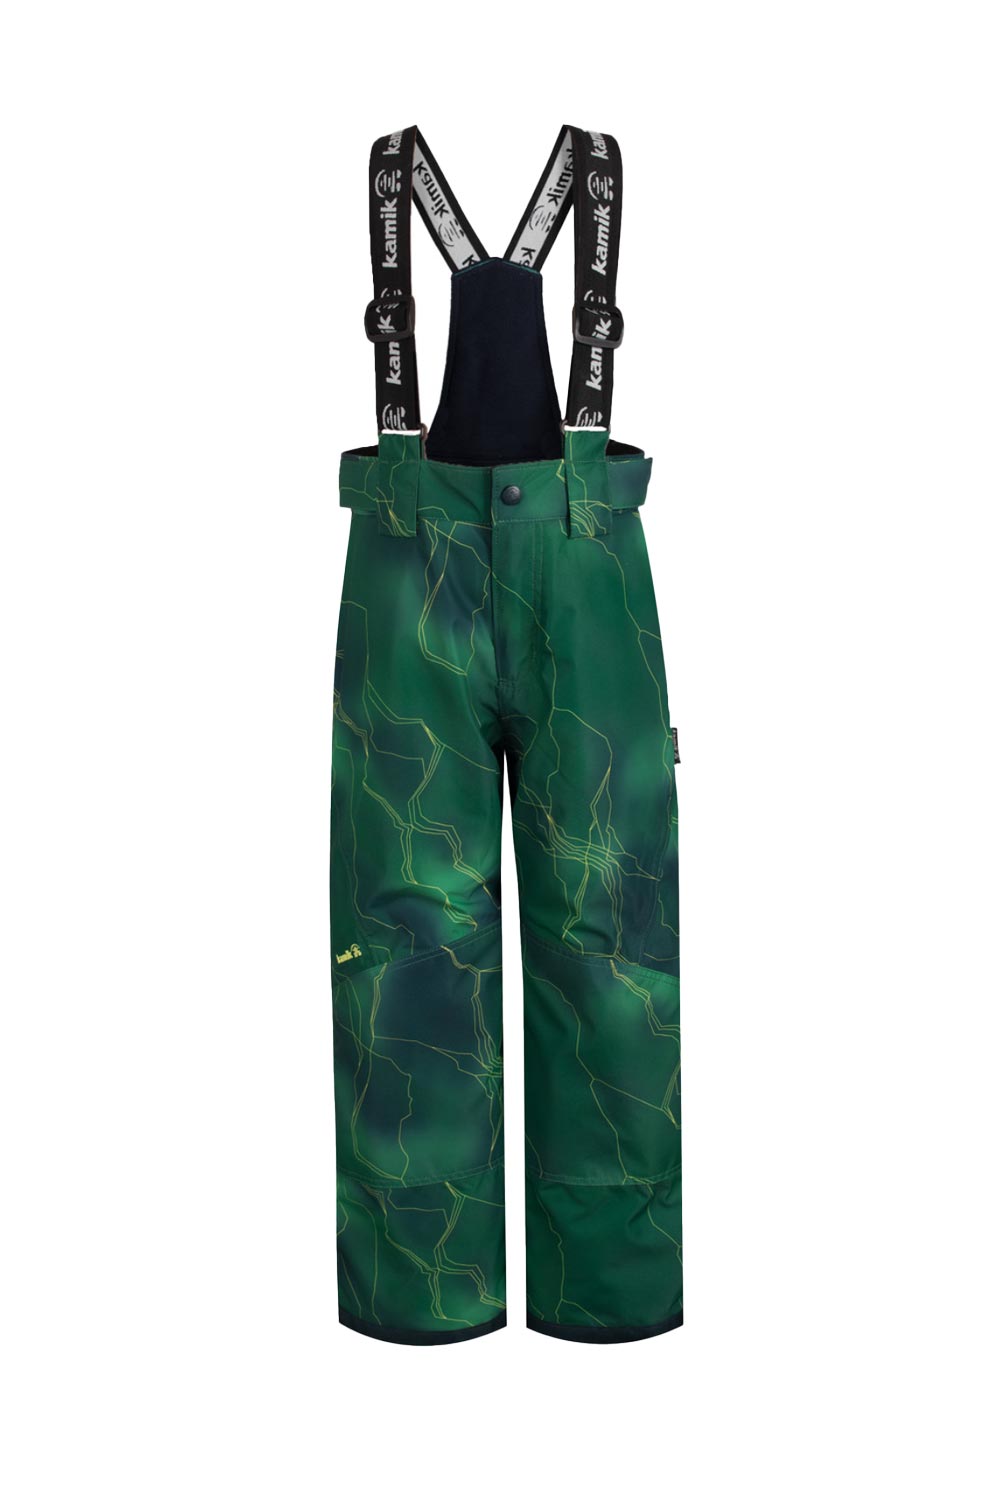 Boys' Kamik ski pants, green & blue swirl pattern